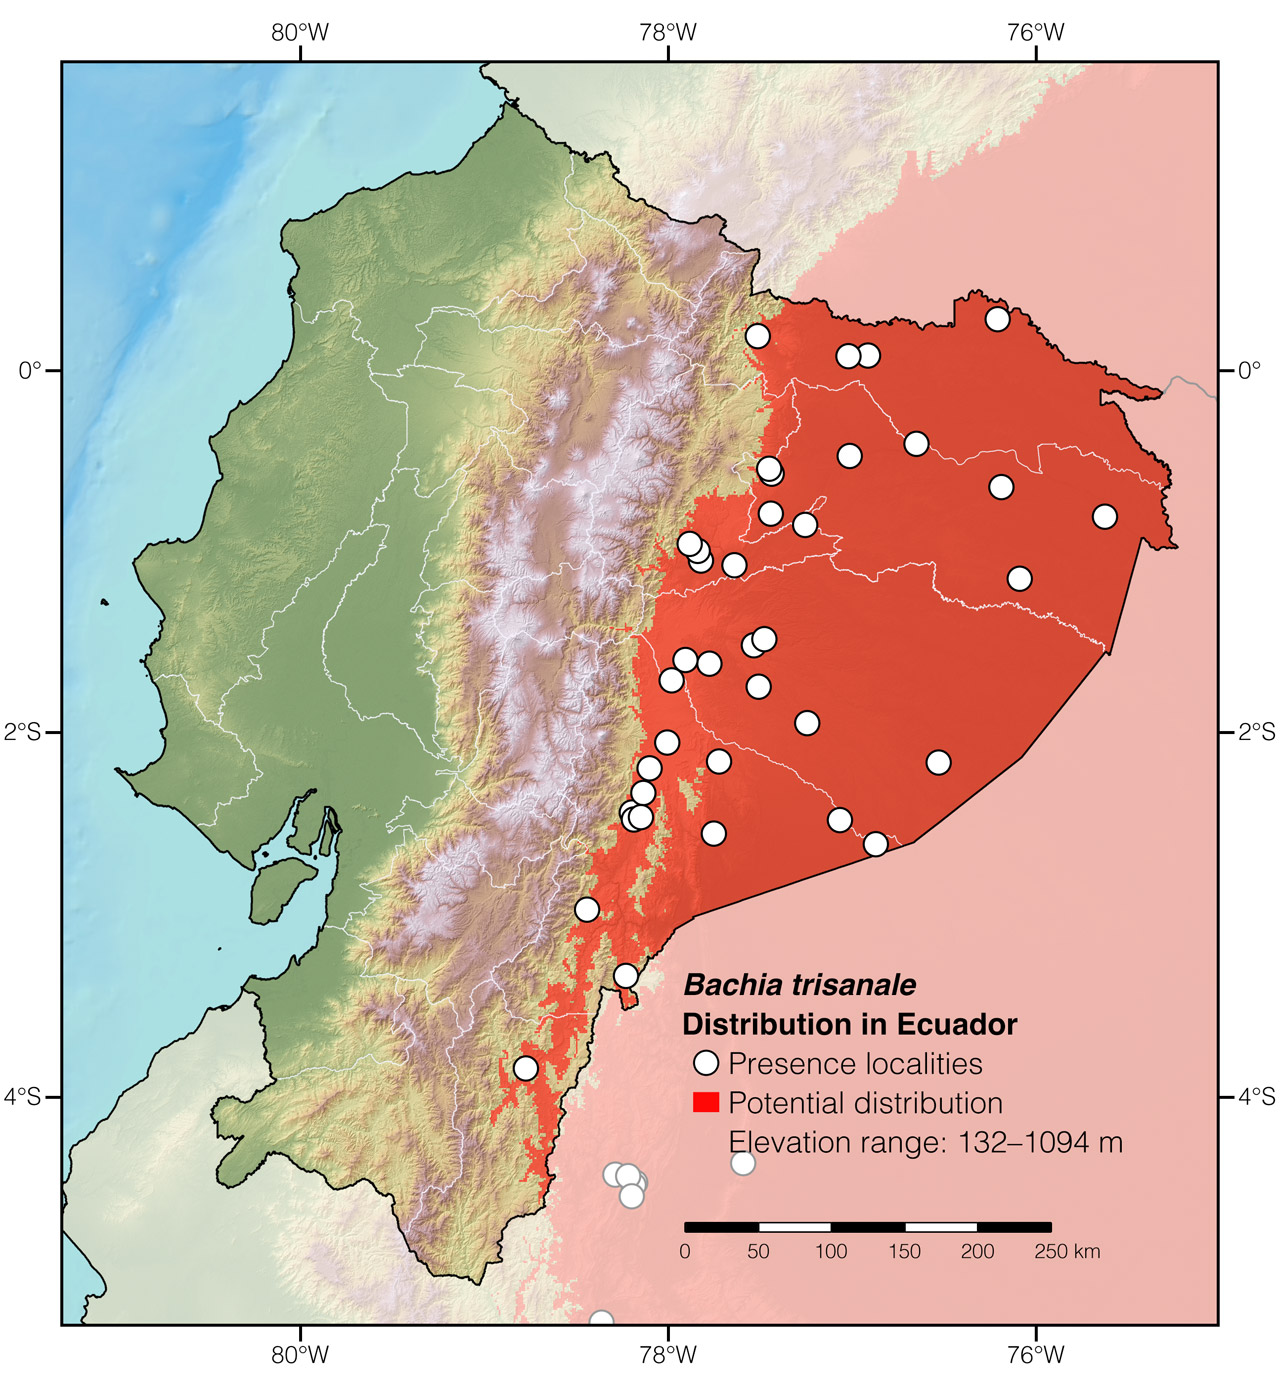 Distribution of Bachia trisanale in Ecuador